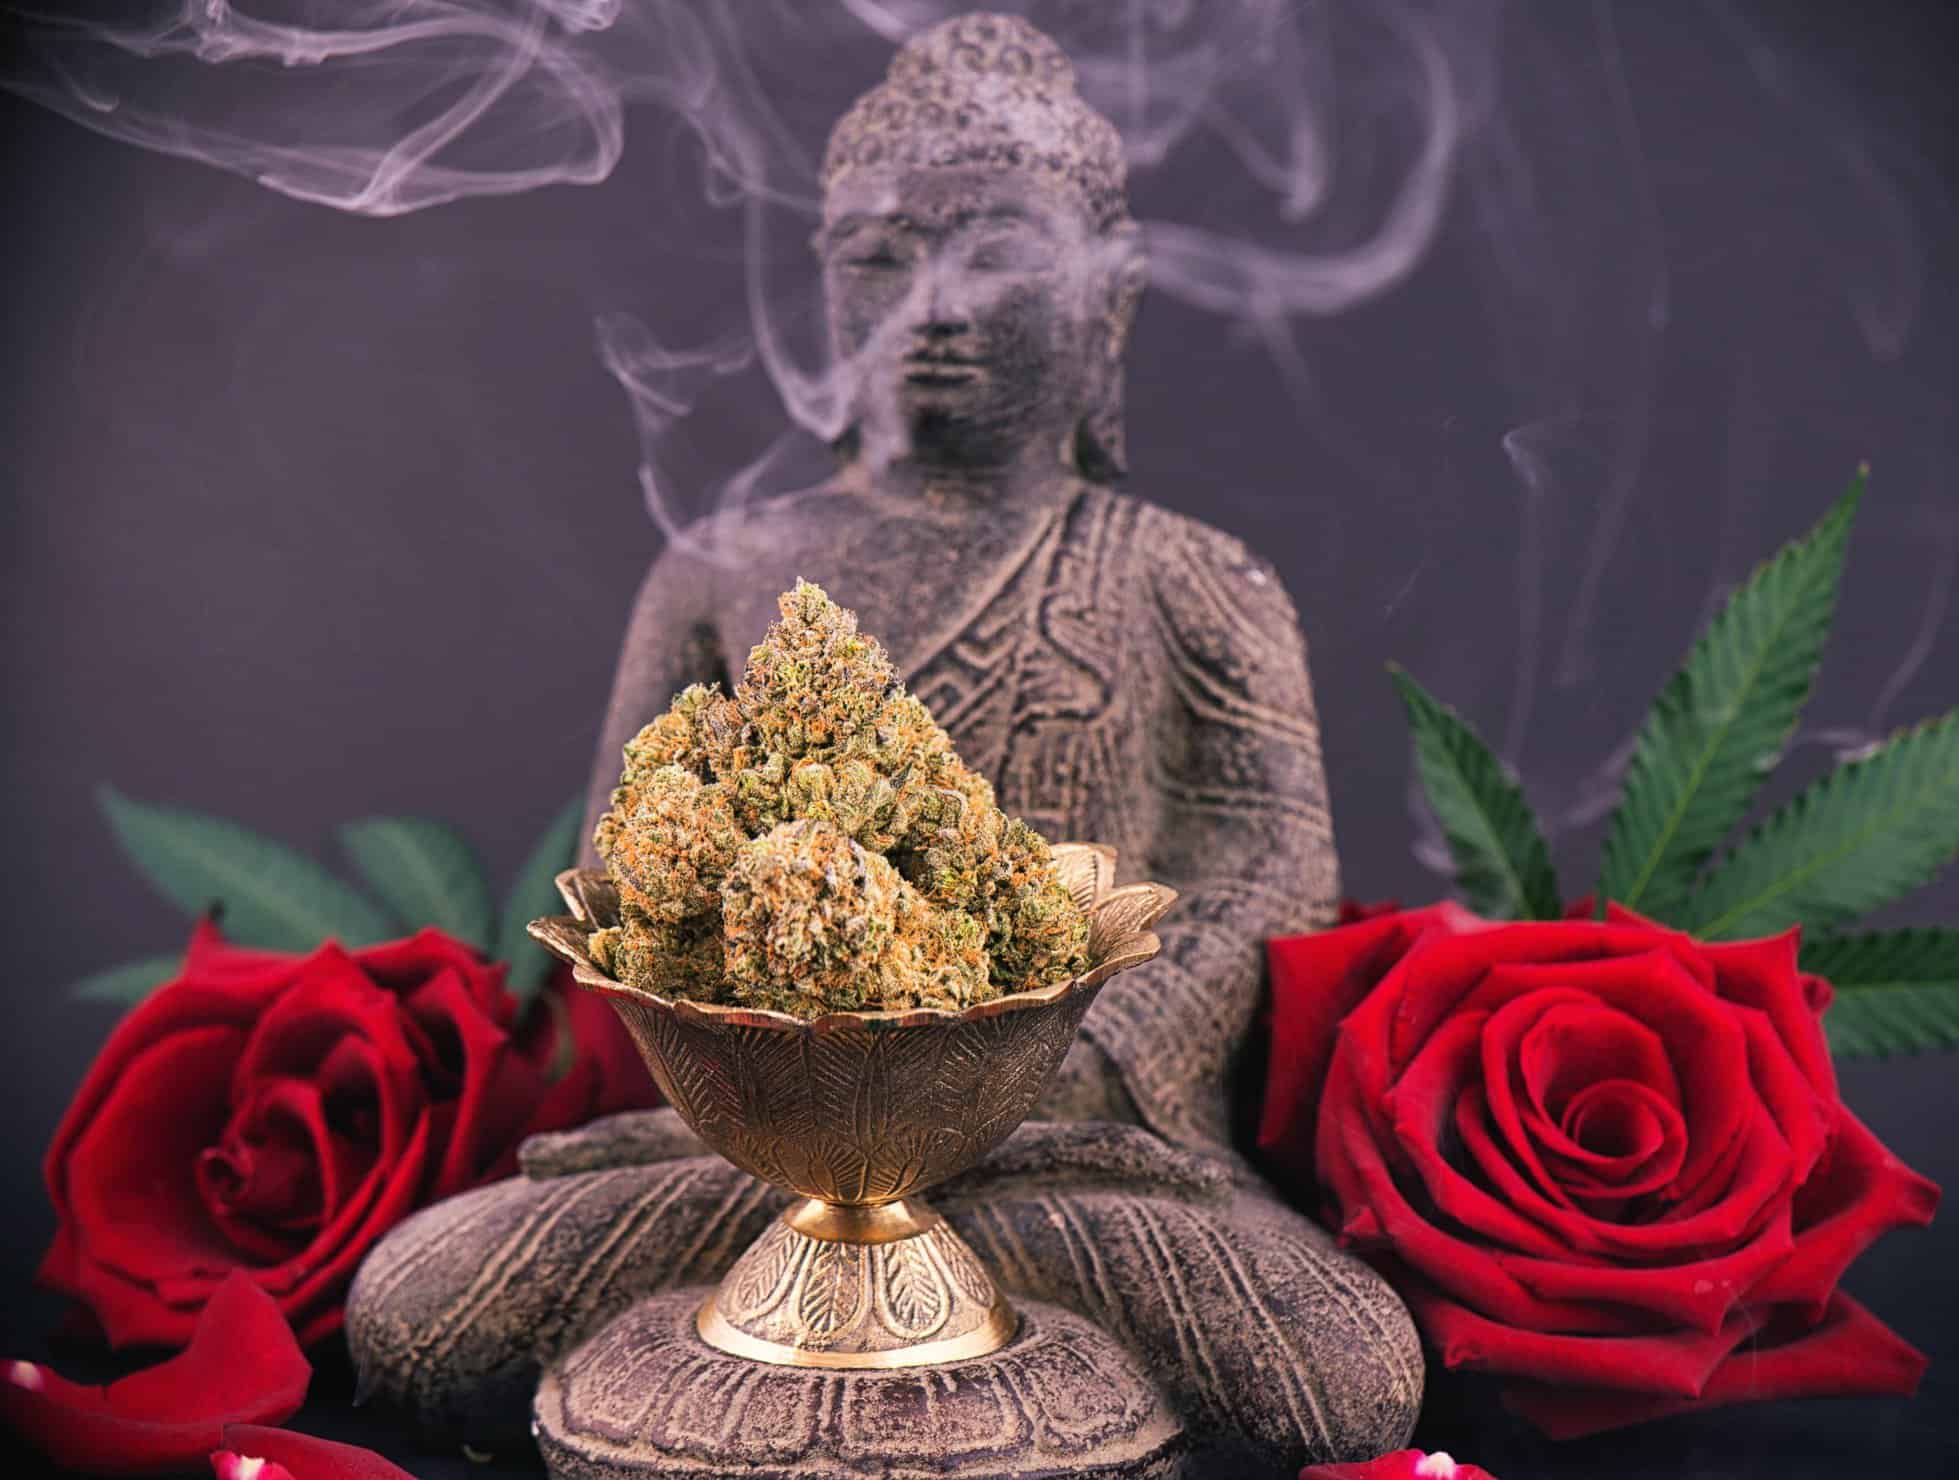 3 Amazing Benefits of Consuming Cannabis While Meditating